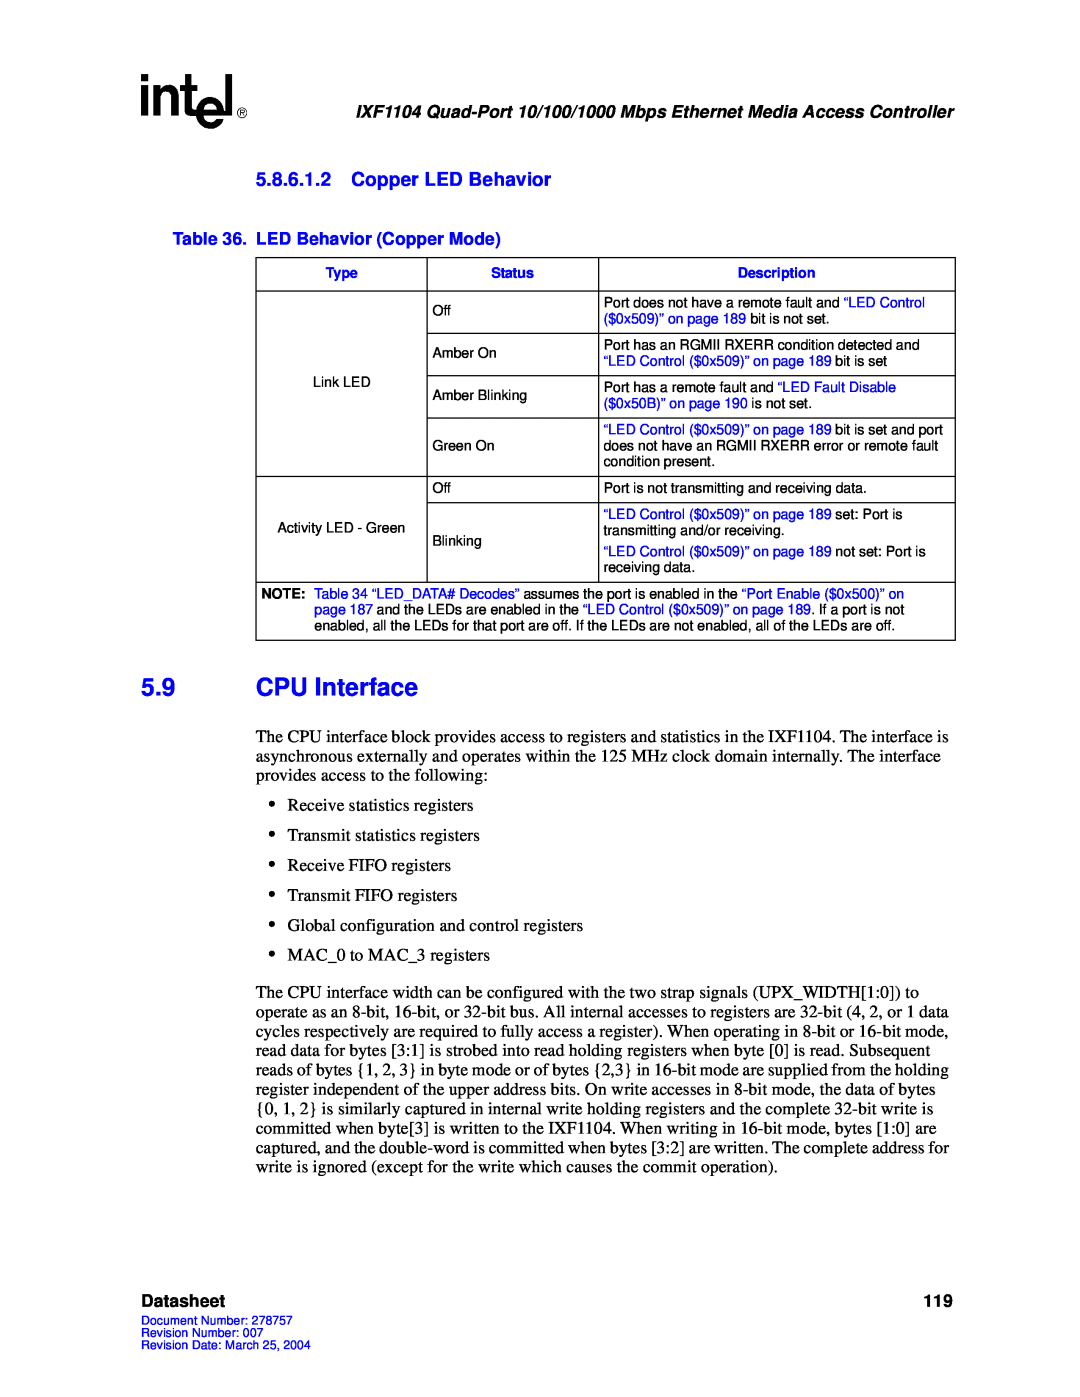 Intel IXF1104 manual 5.9CPU Interface, 5.8.6.1.2Copper LED Behavior, Datasheet 